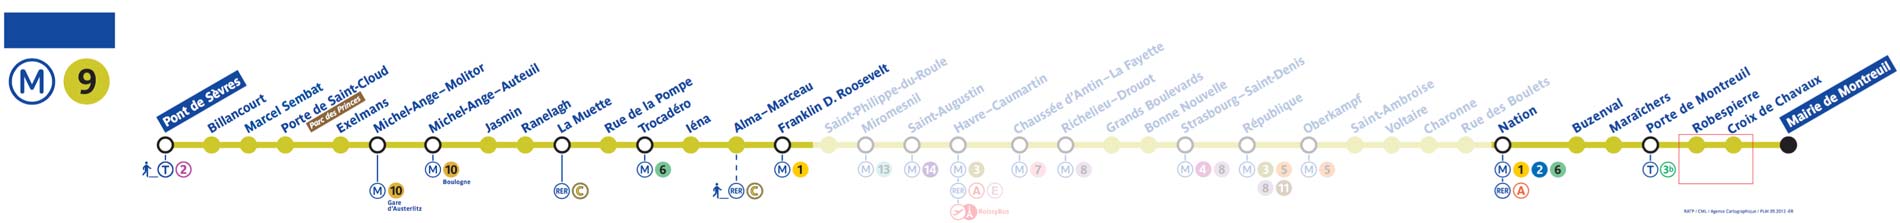 metro-9-stations-open-dec-2019-strike - Paris by Train